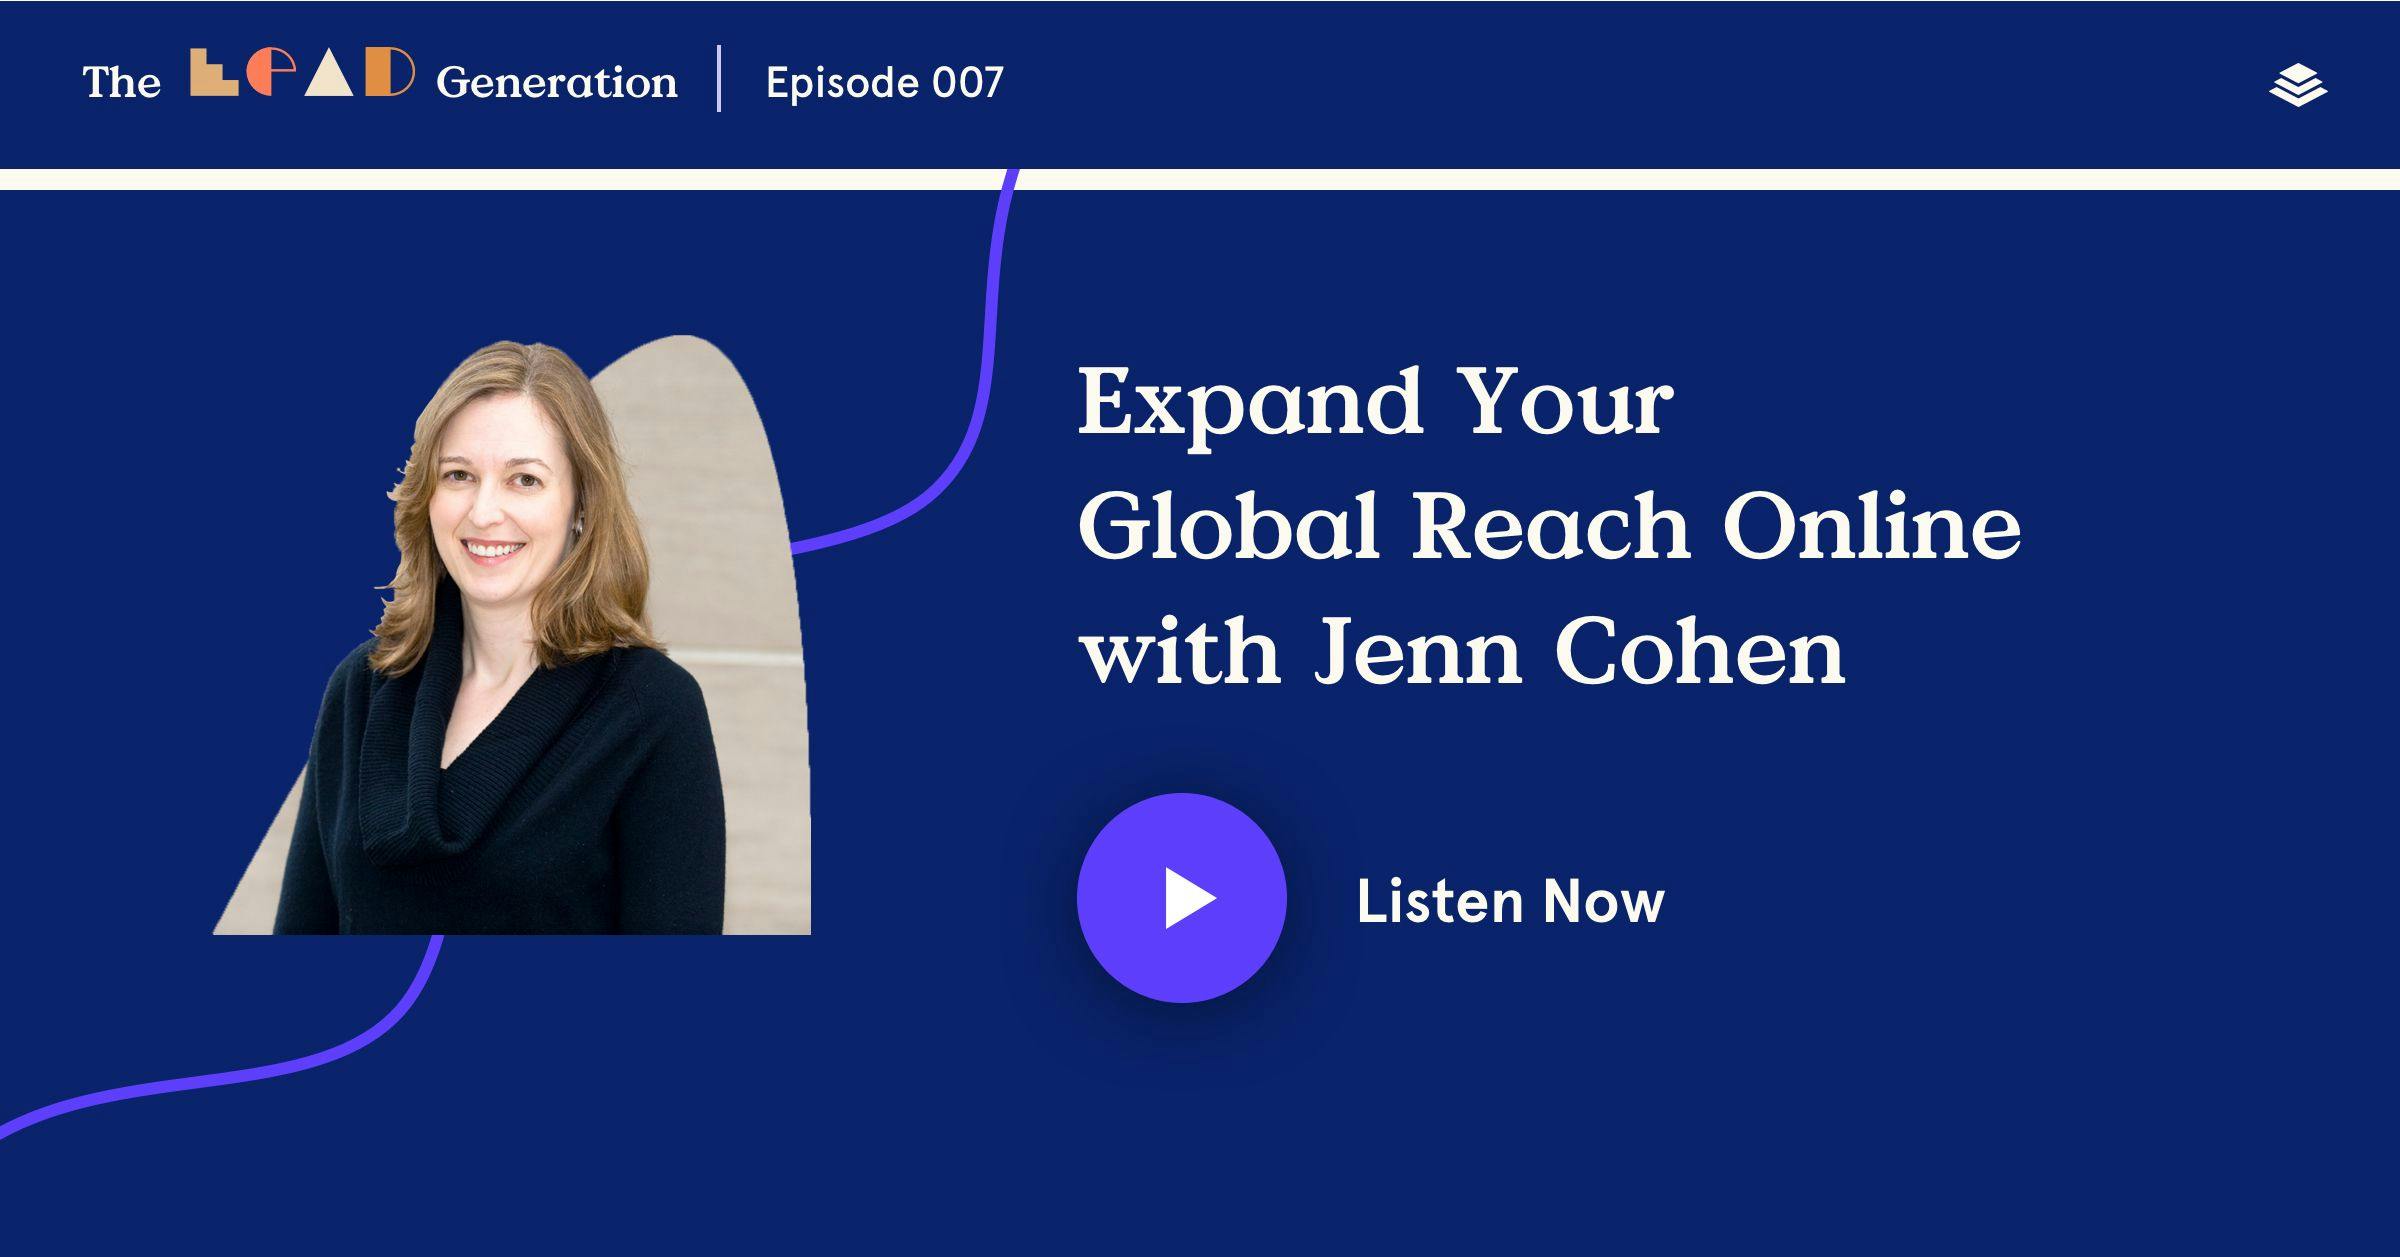 07 Jenn Cohen Tlg Podcast@2x